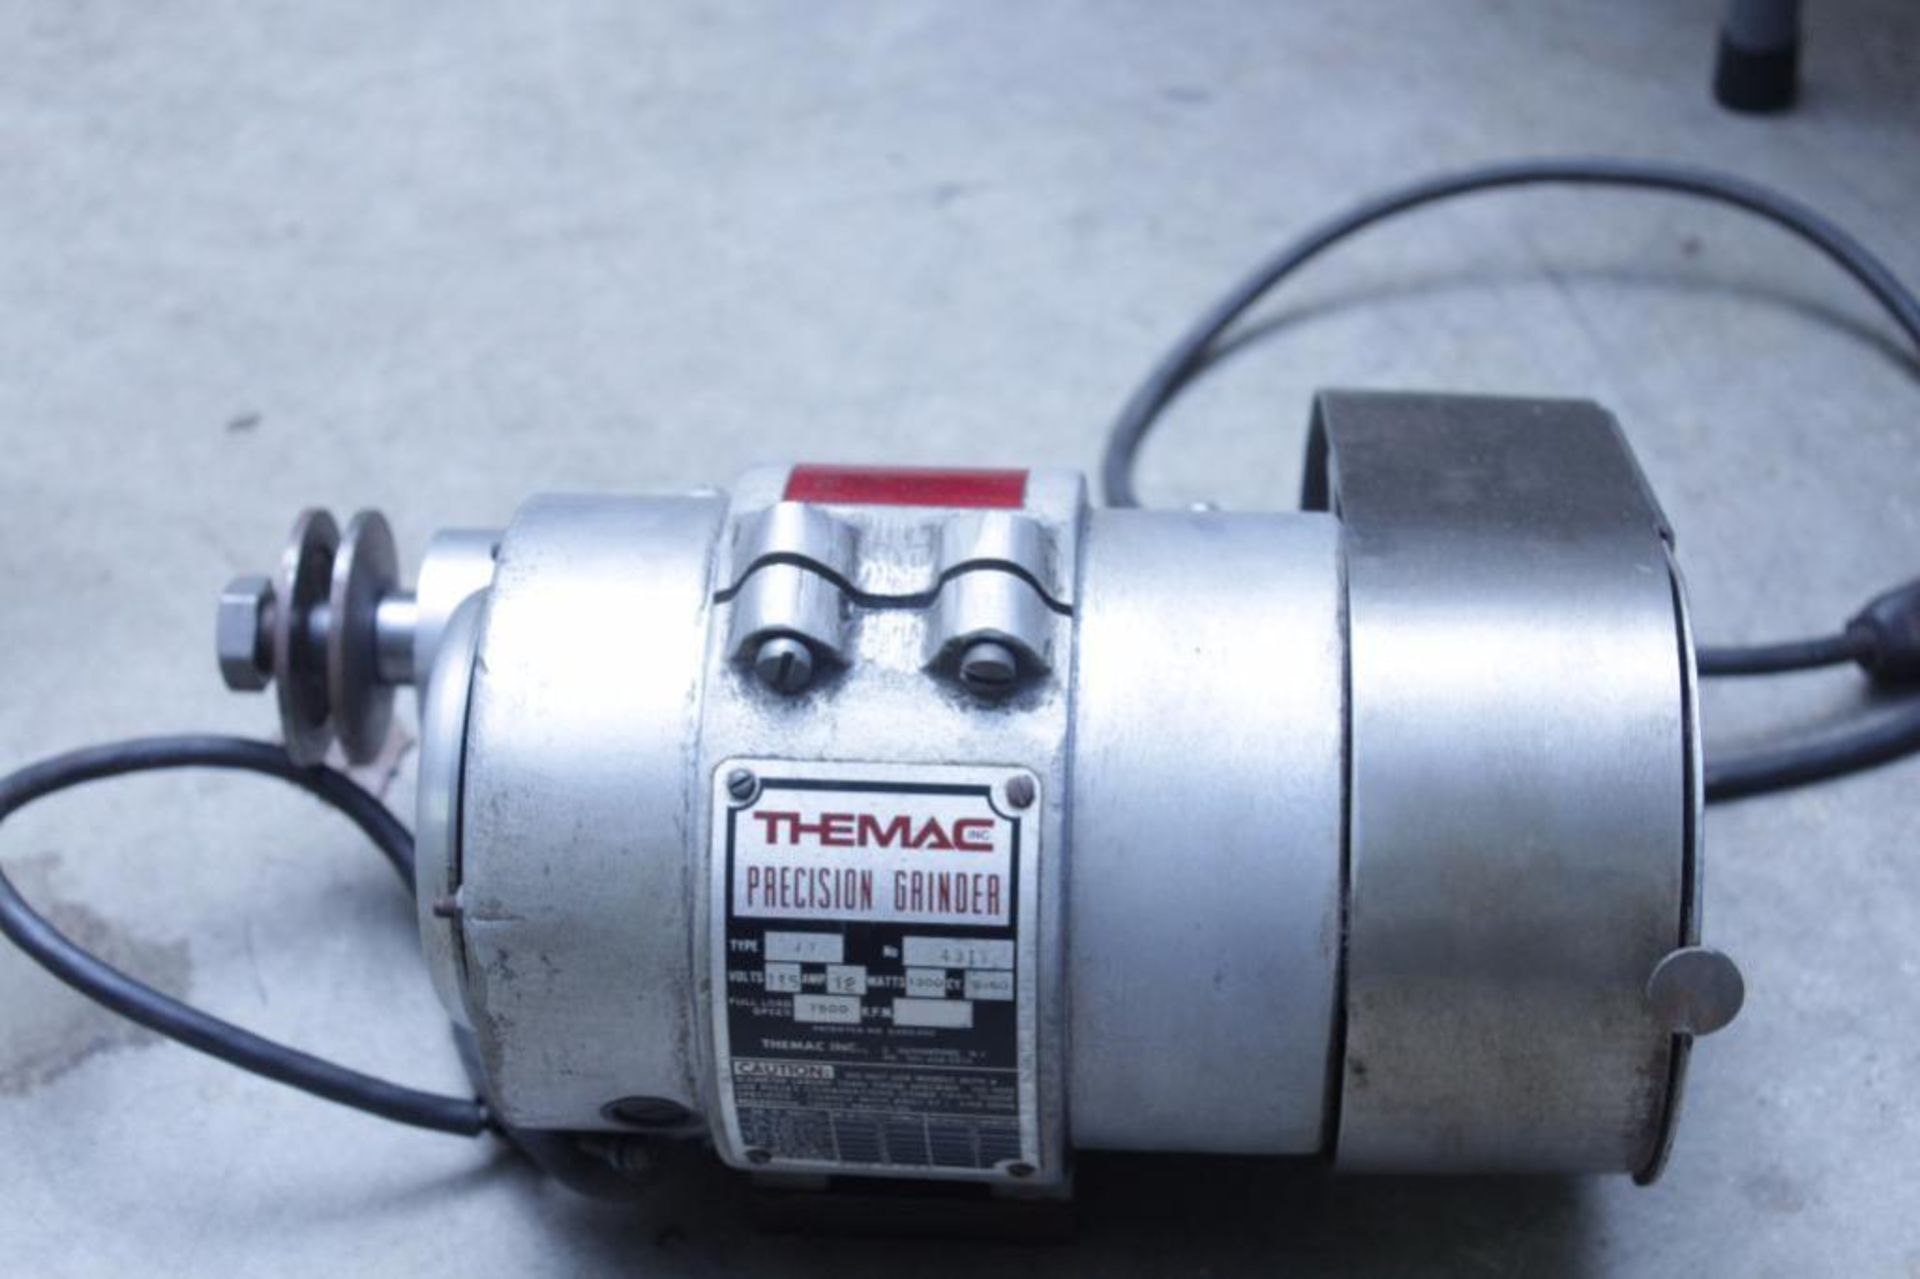 Themac J-7 Precision grinder 7500 RPM/ 115v/1ph - Image 2 of 5